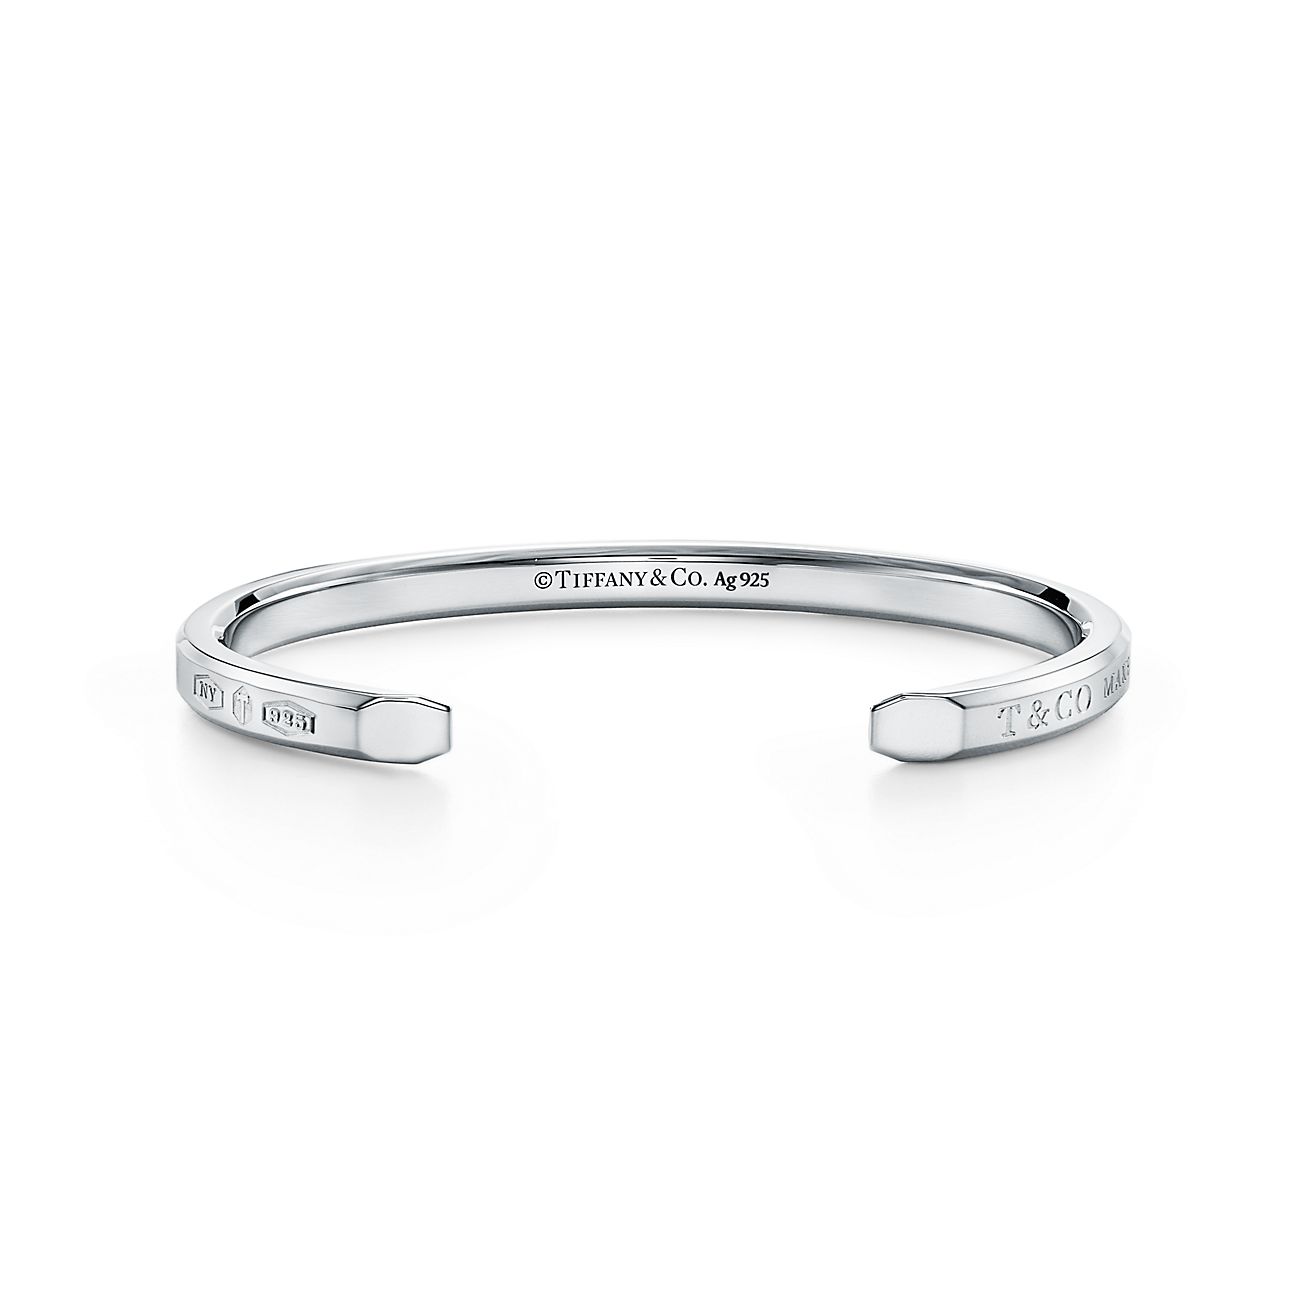 tiffany cuff bracelets sterling silver